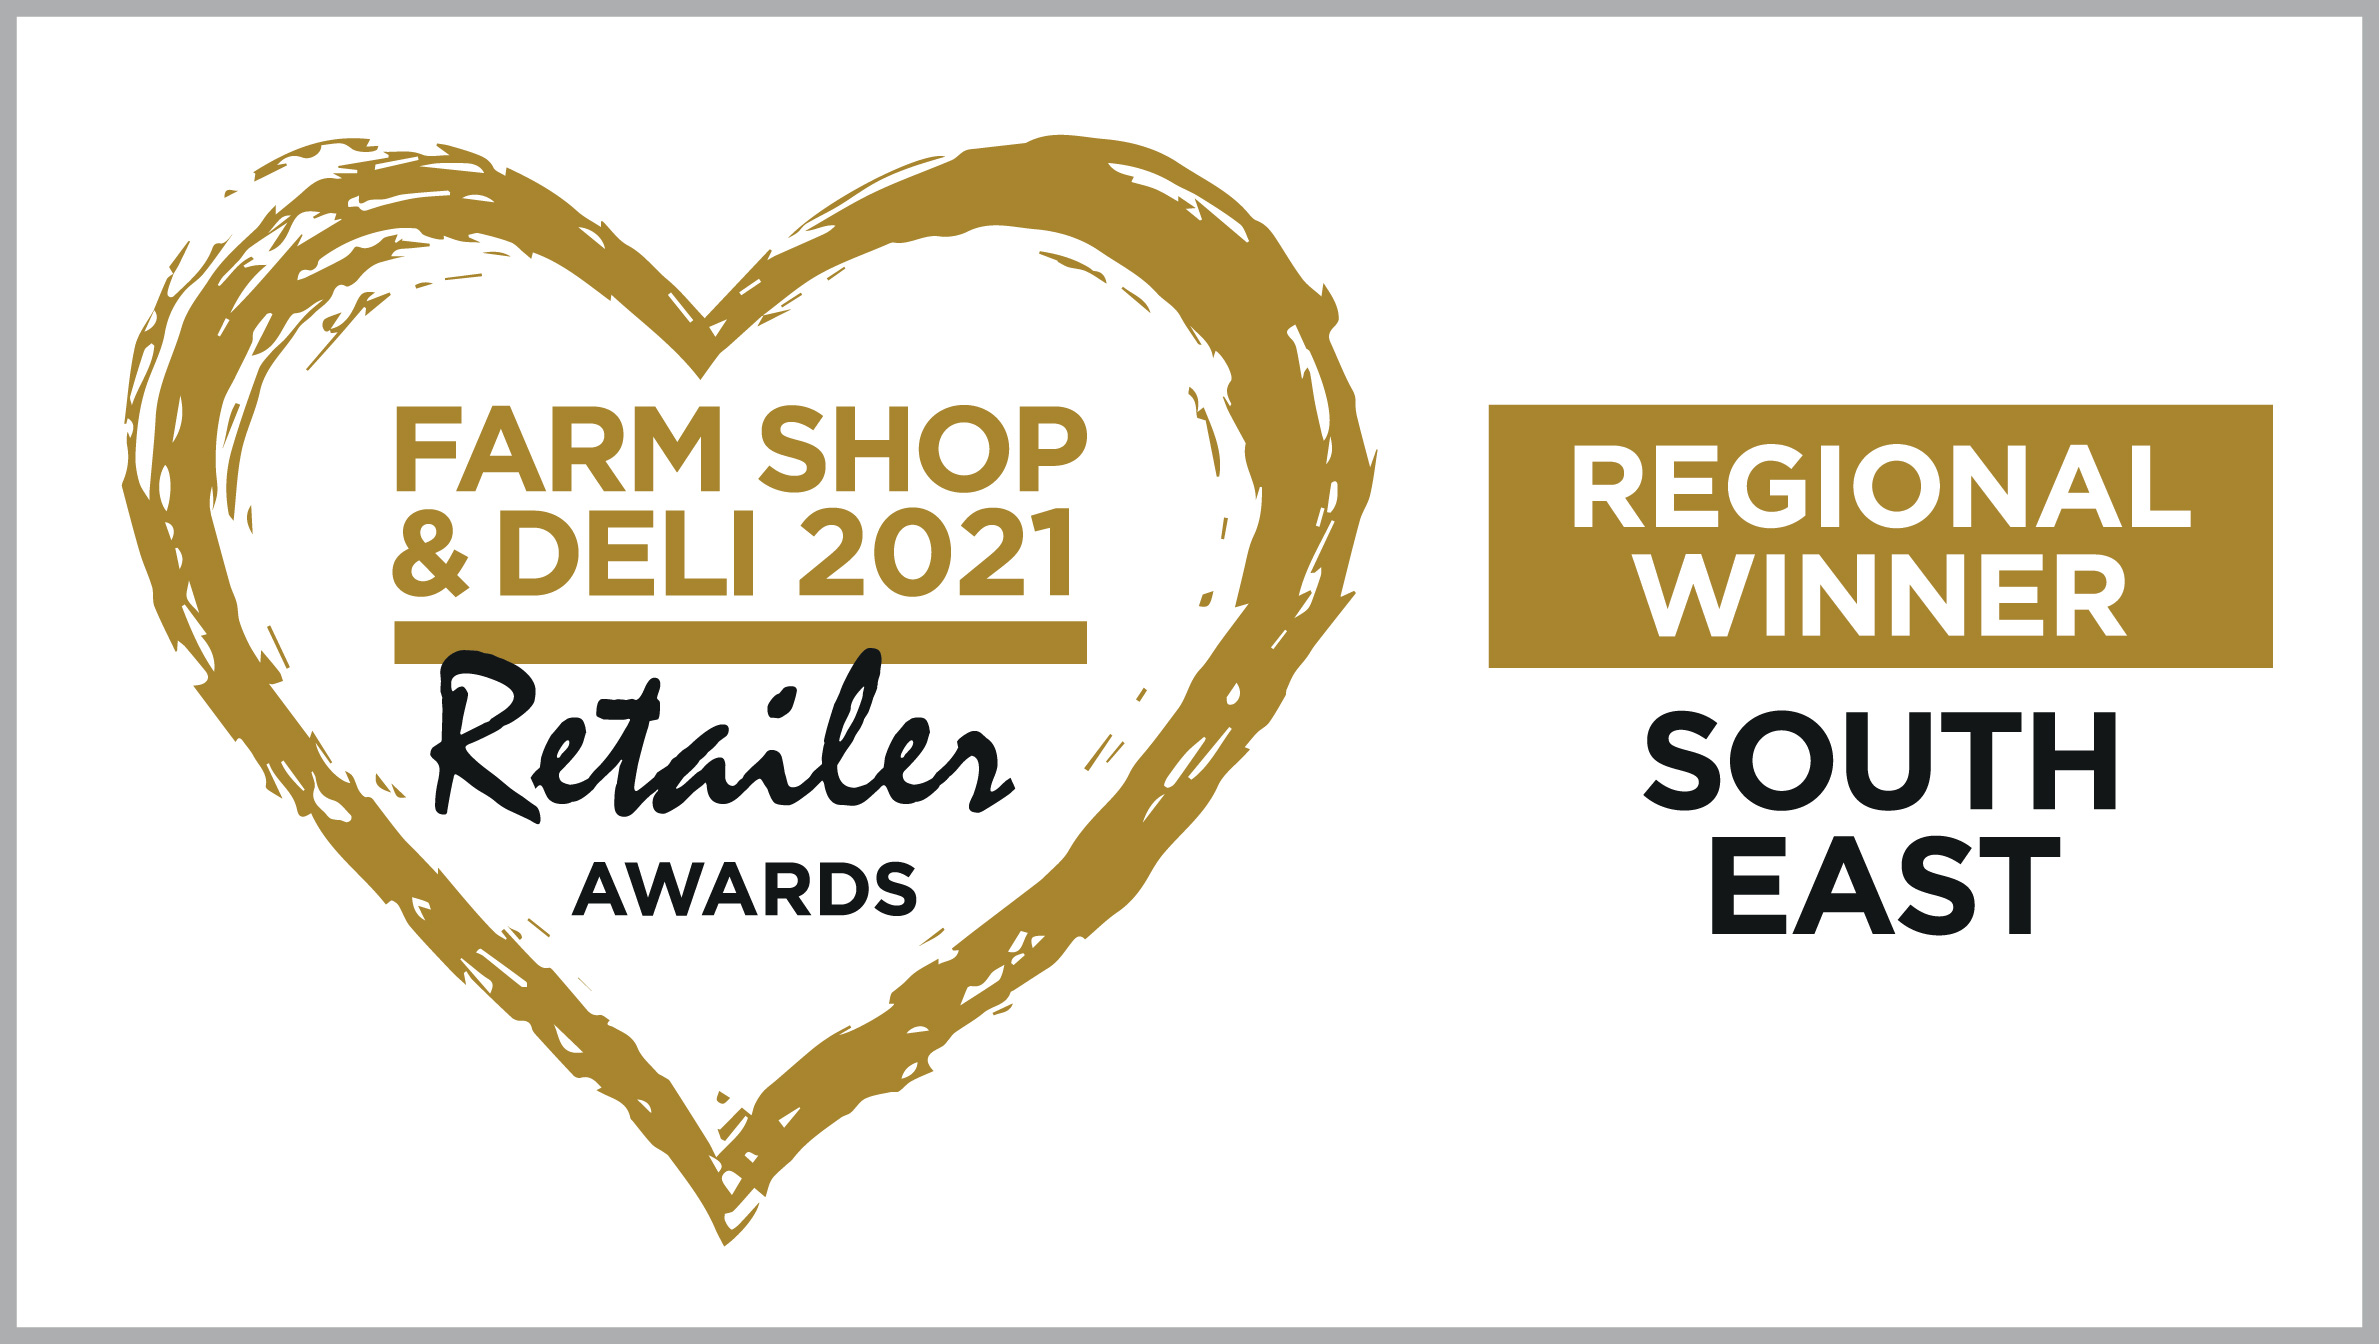 Farm Shop & Deli Awards - South East - Regional Winner